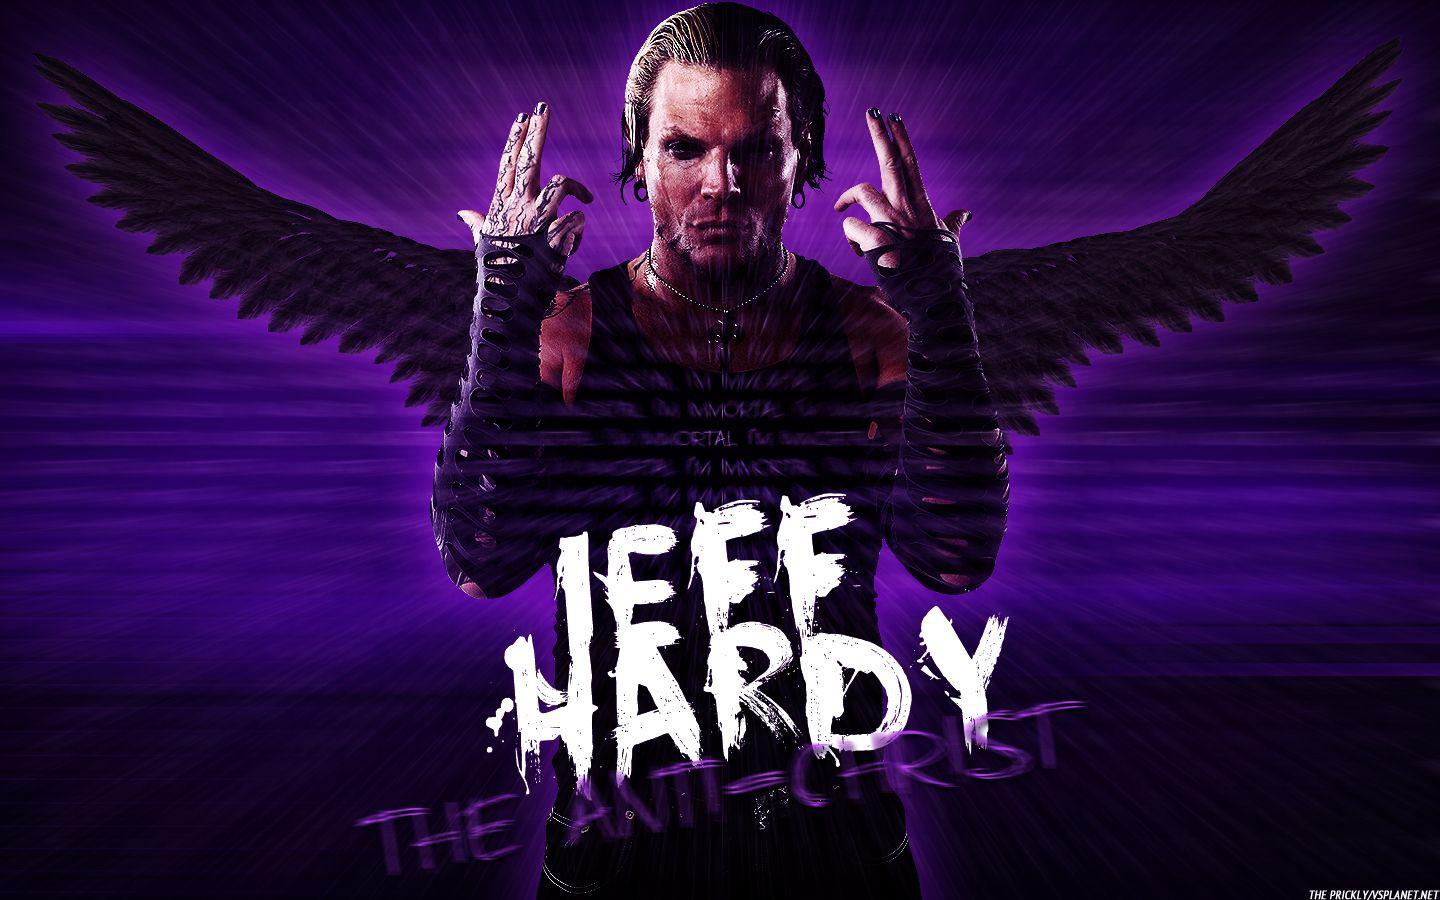 jeff hardy wallpaper,purple,violet,graphic design,album cover,font